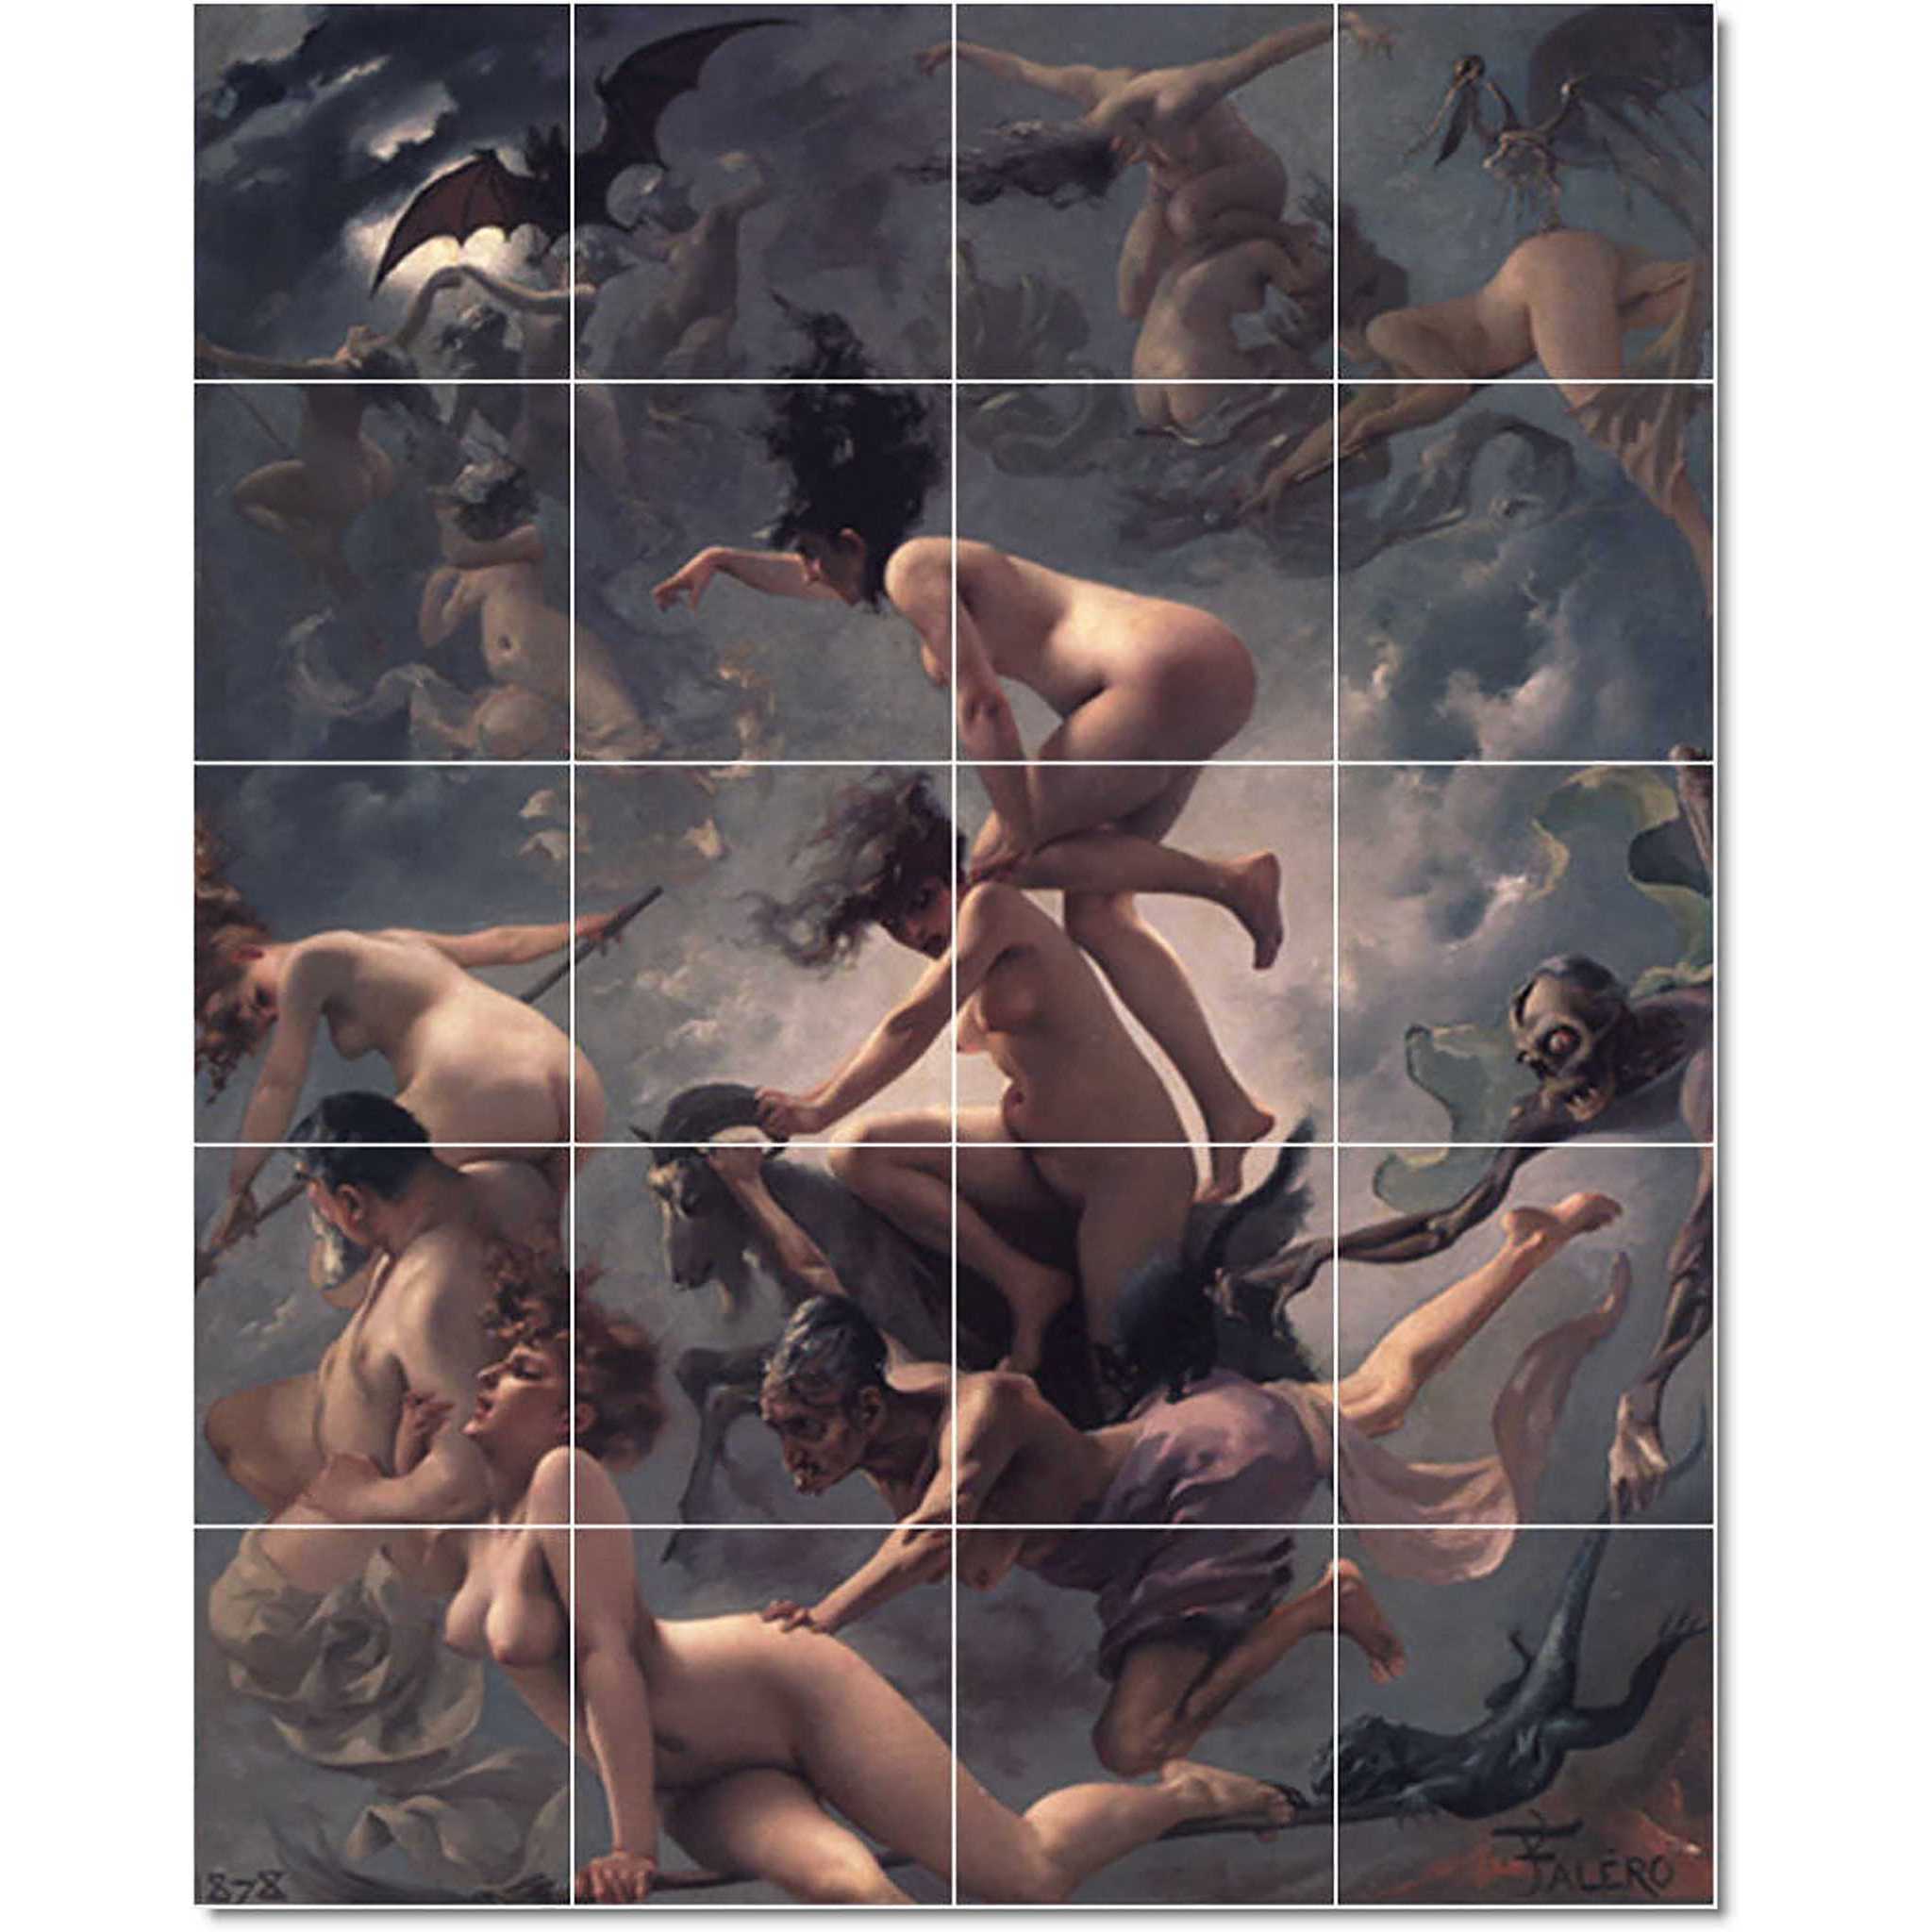 luis riccardo falero mythology painting ceramic tile mural p22399